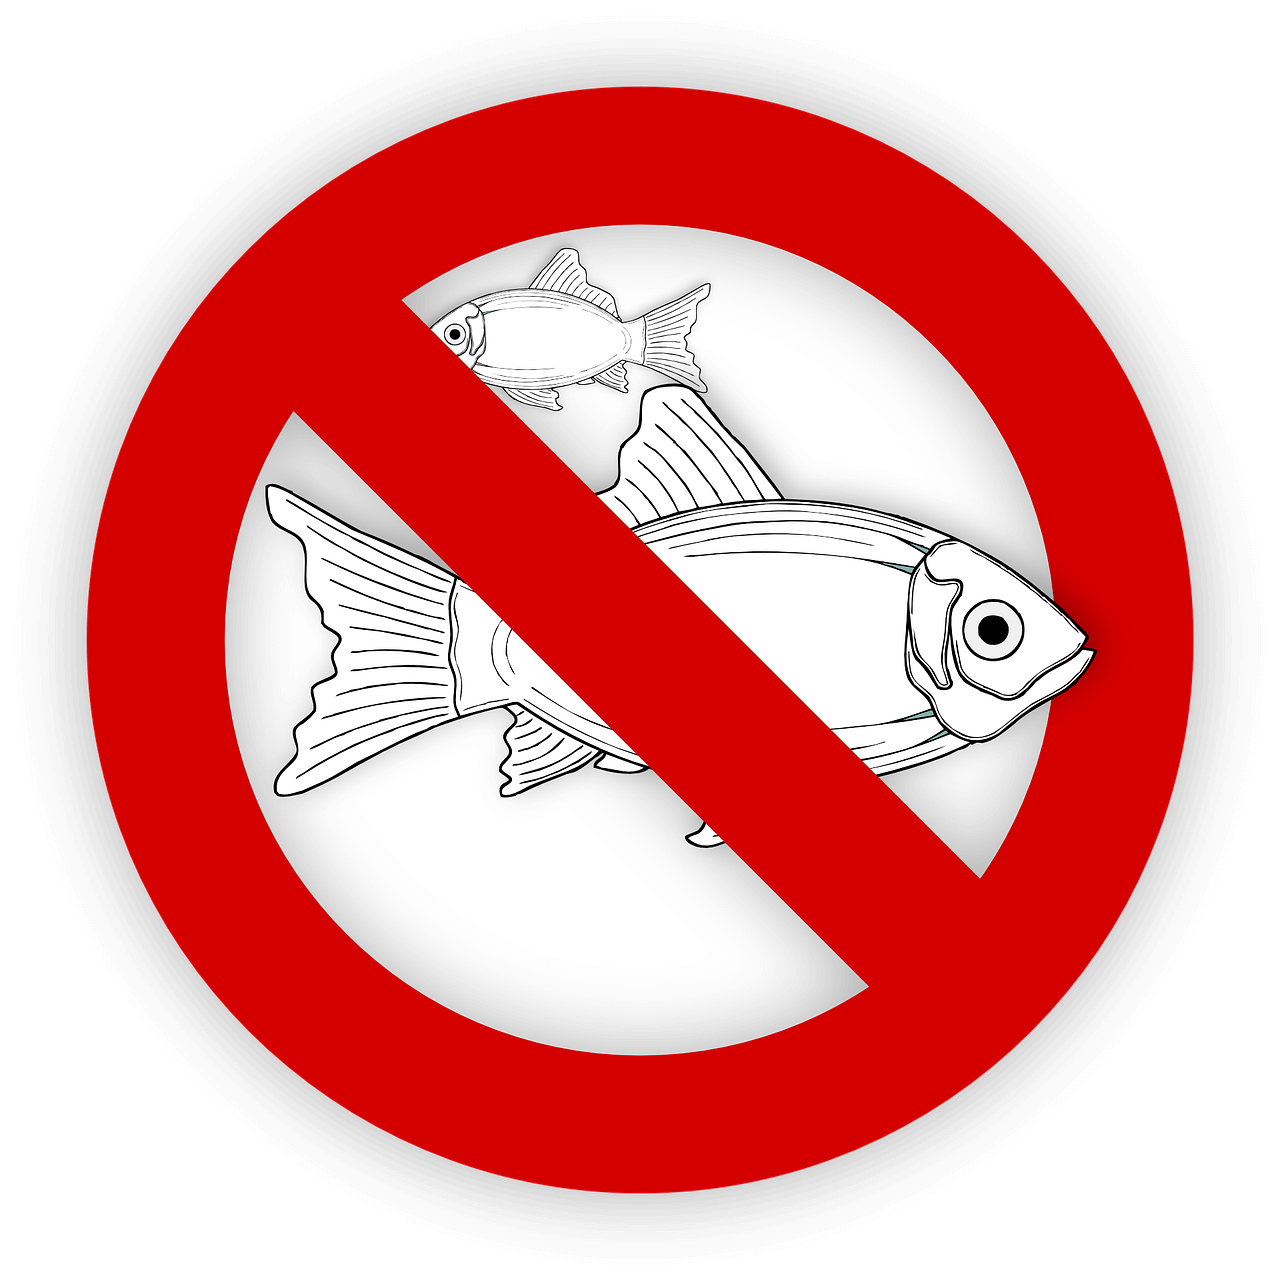 Табличка запрета на рыбу. Рыба запрещена. Ловля рыбы запрещена знак. Перечеркнутая рыба. Когда начинается запрет на рыбу